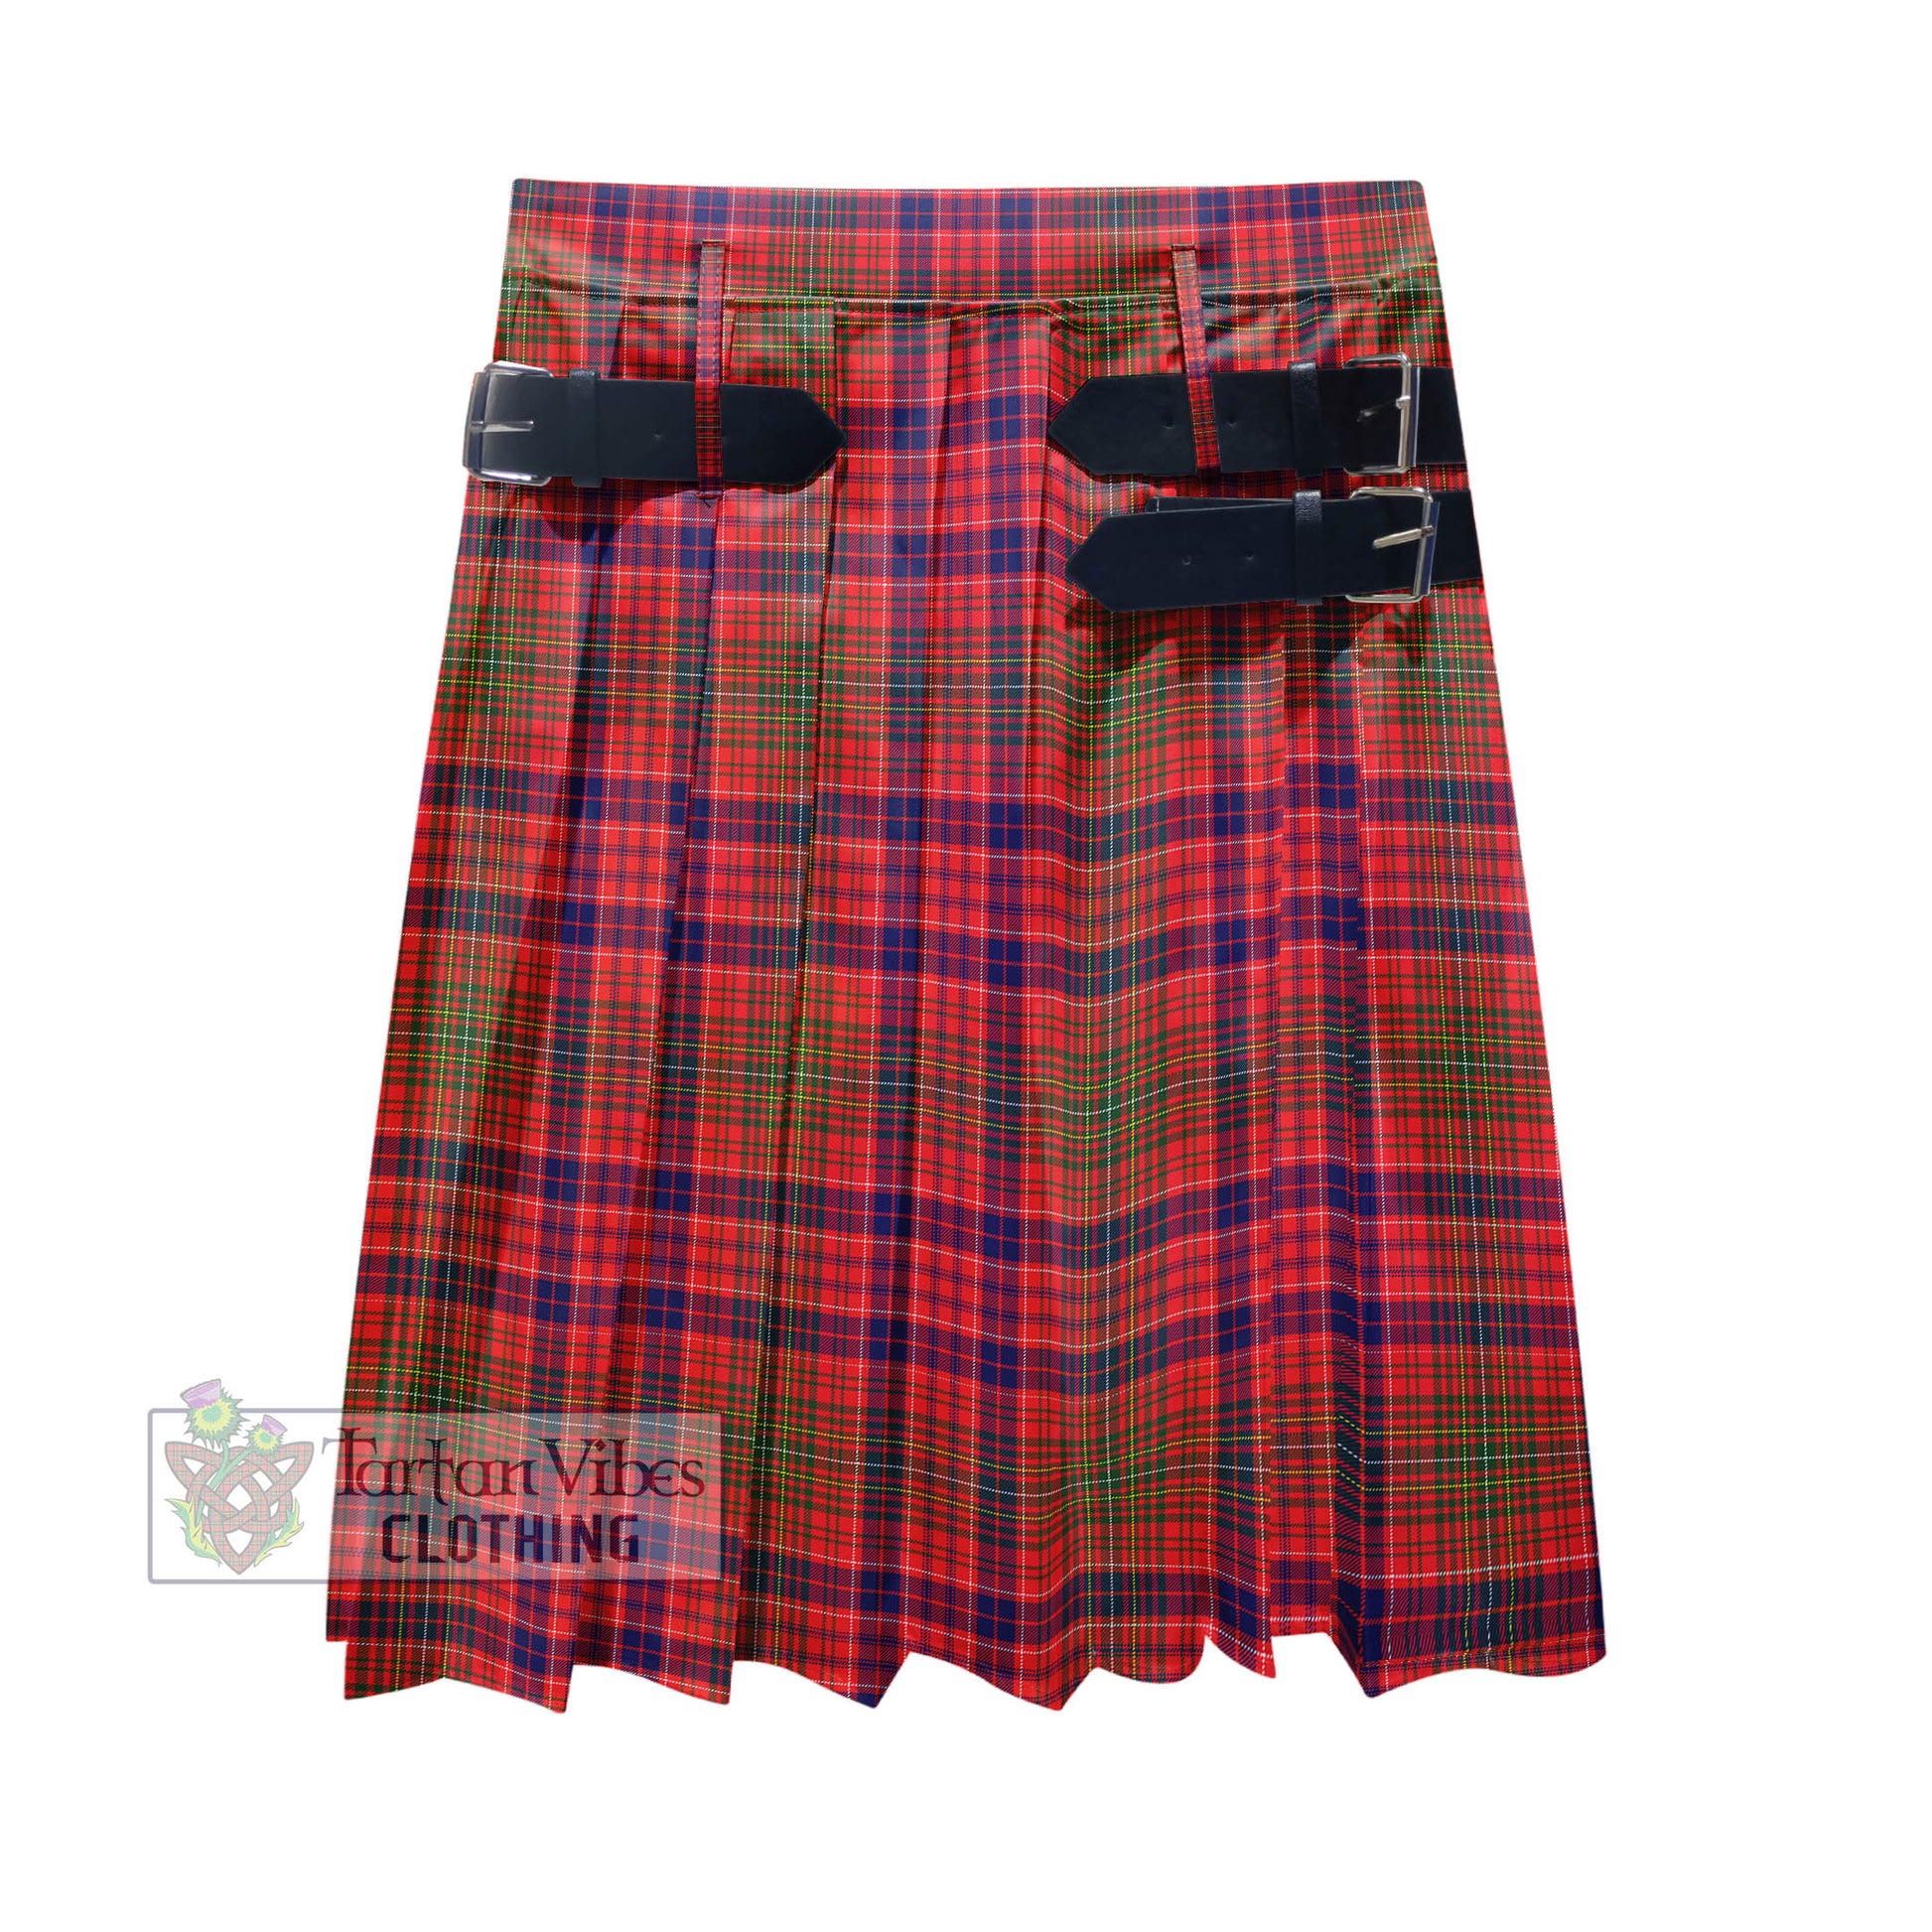 Tartan Vibes Clothing Lumsden Modern Tartan Men's Pleated Skirt - Fashion Casual Retro Scottish Style